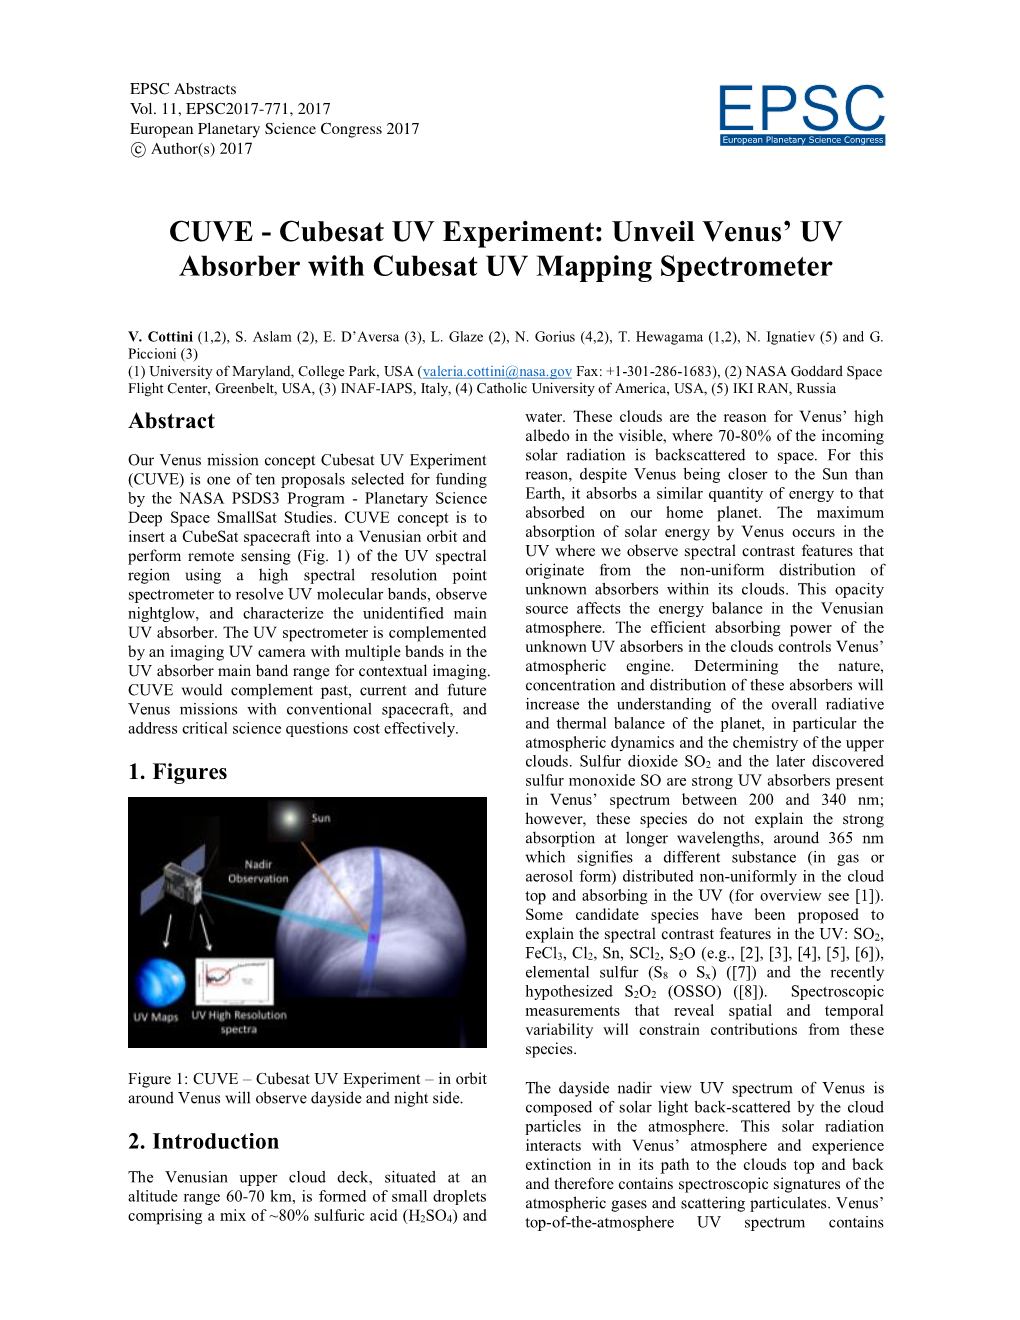 Cubesat UV Experiment: Unveil Venus’ UV Absorber with Cubesat UV Mapping Spectrometer